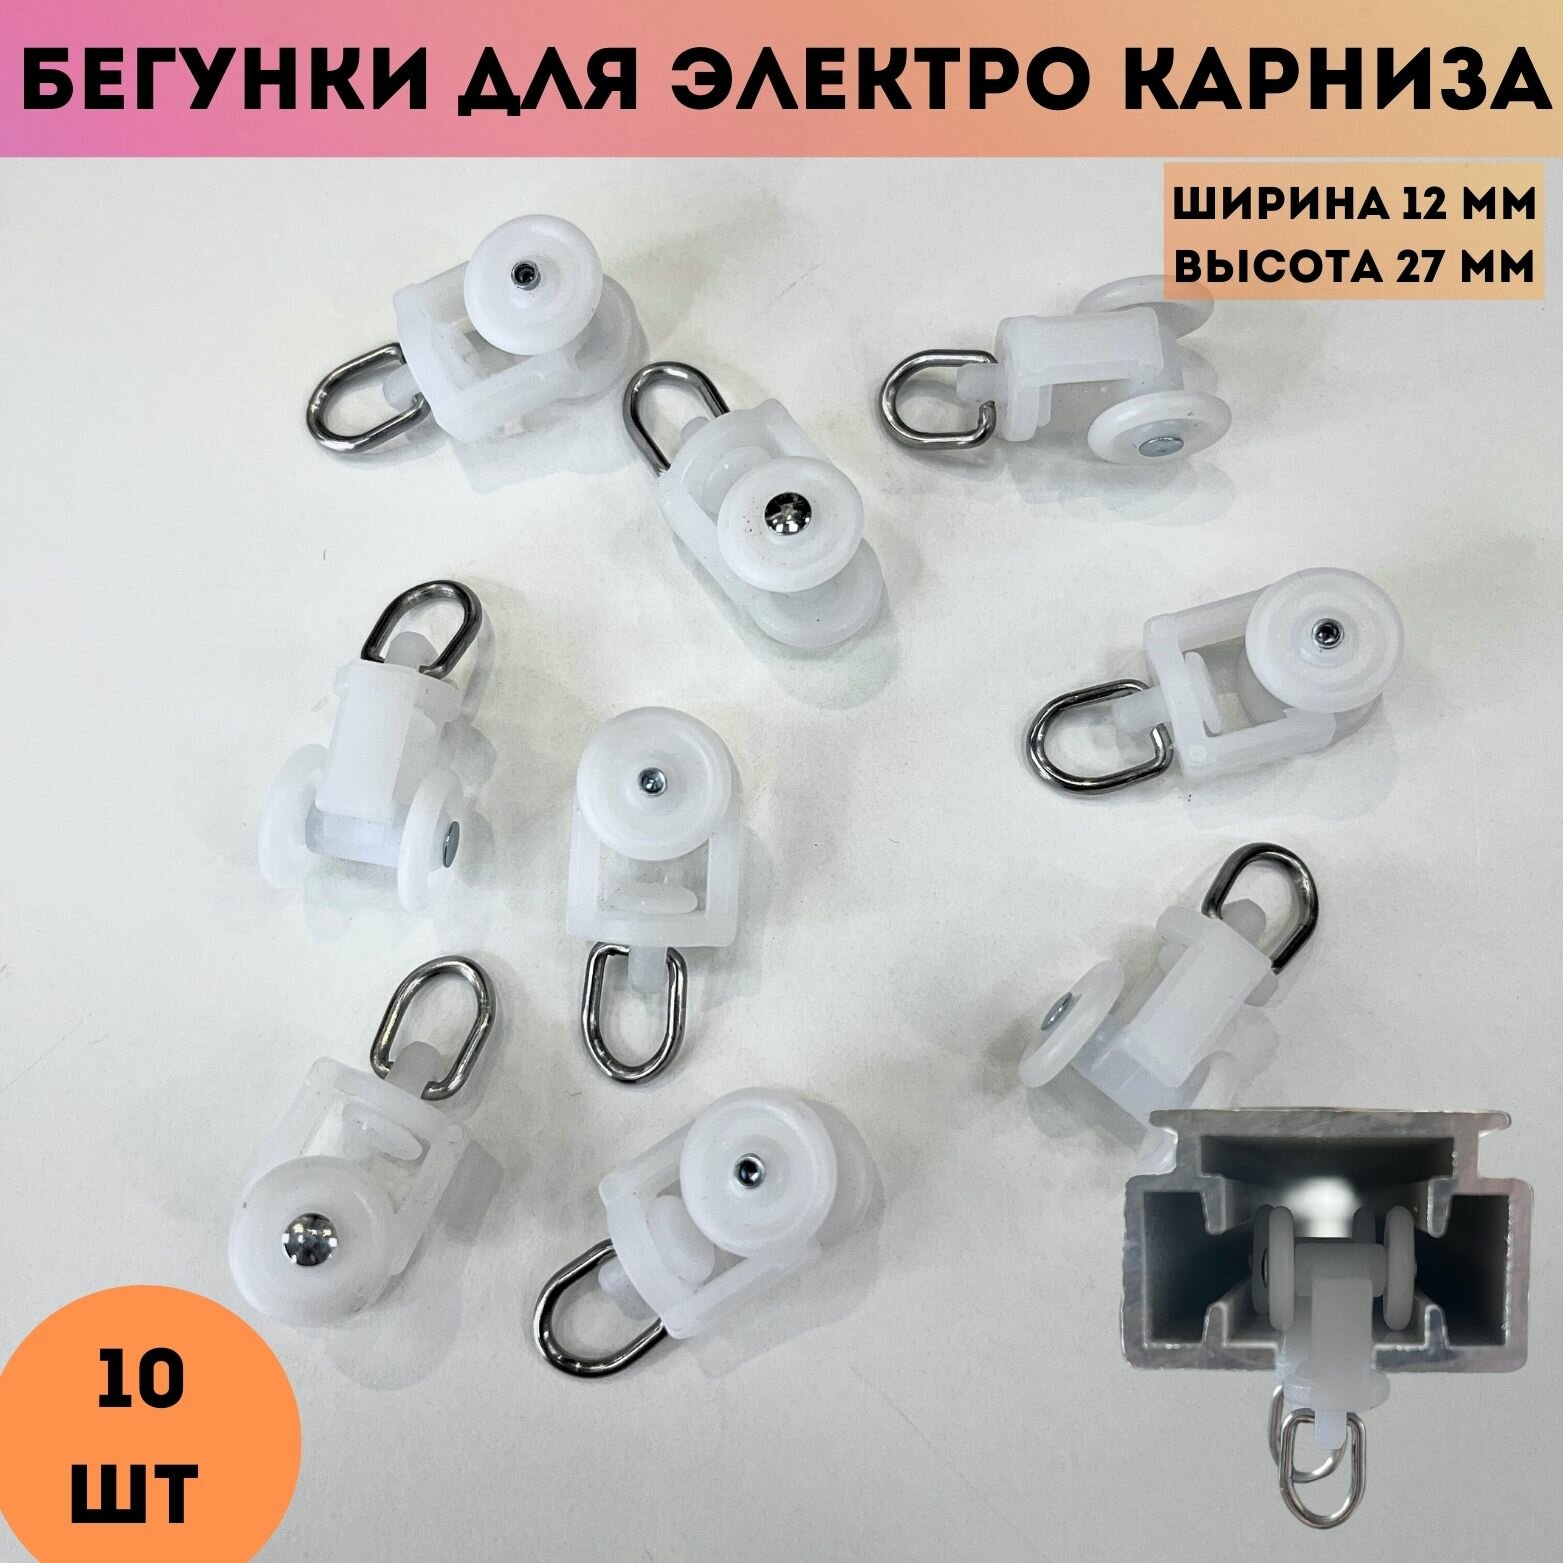 Бегунки (крючки) для электрокарниза ш. 12 мм (Xiaomi, Dooya, Amigo, Onviz и др.), 10 шт